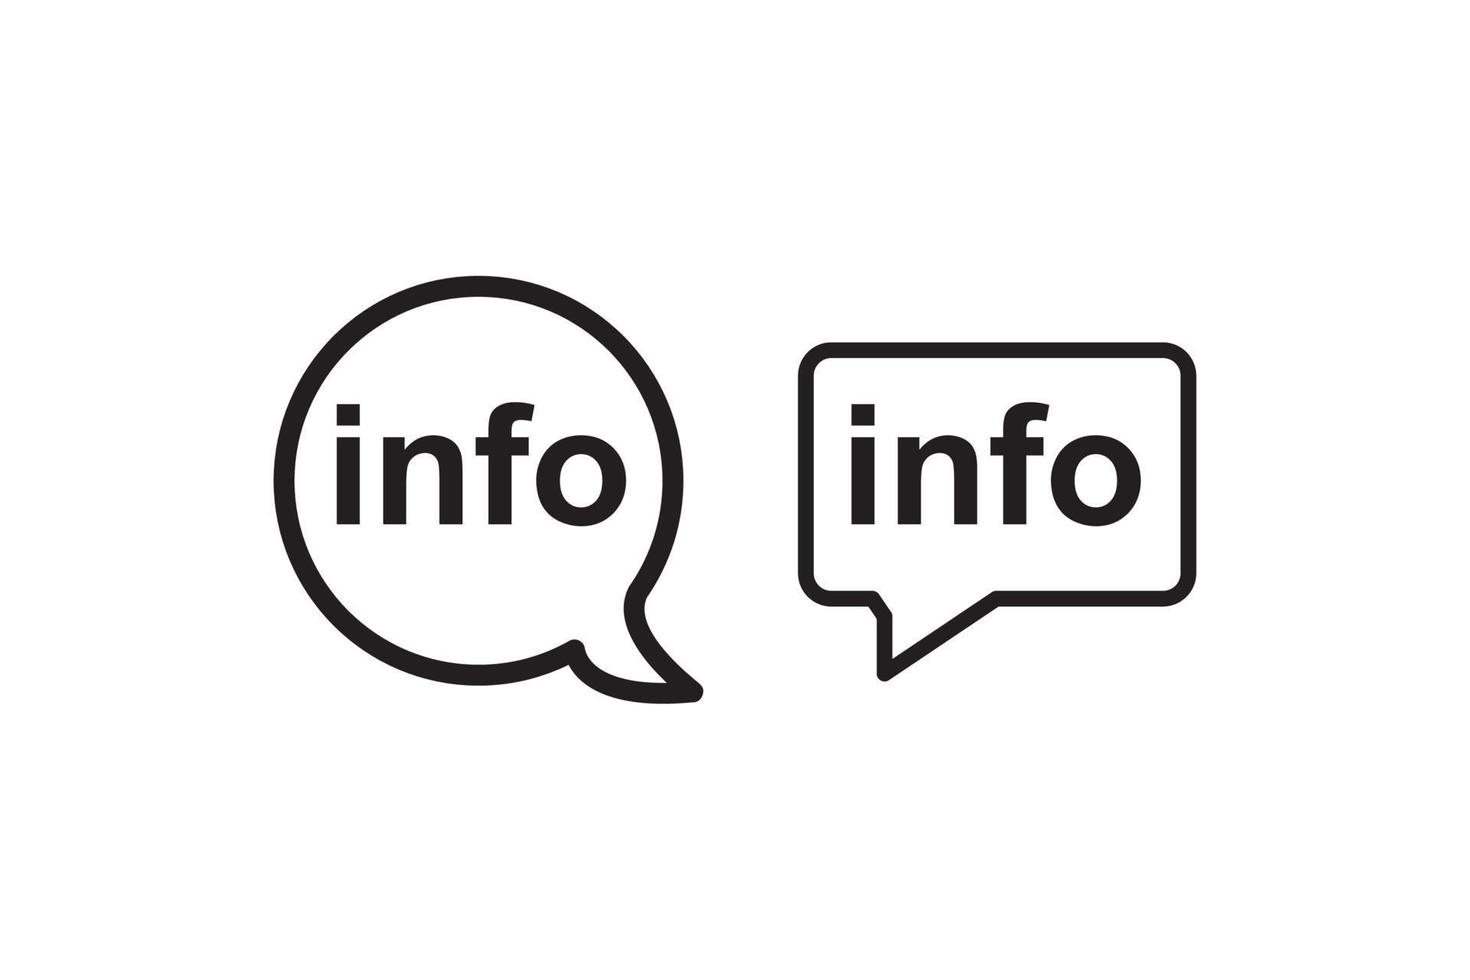 icône d'information, illustration vectorielle de symbole d'icône d'information. vecteur